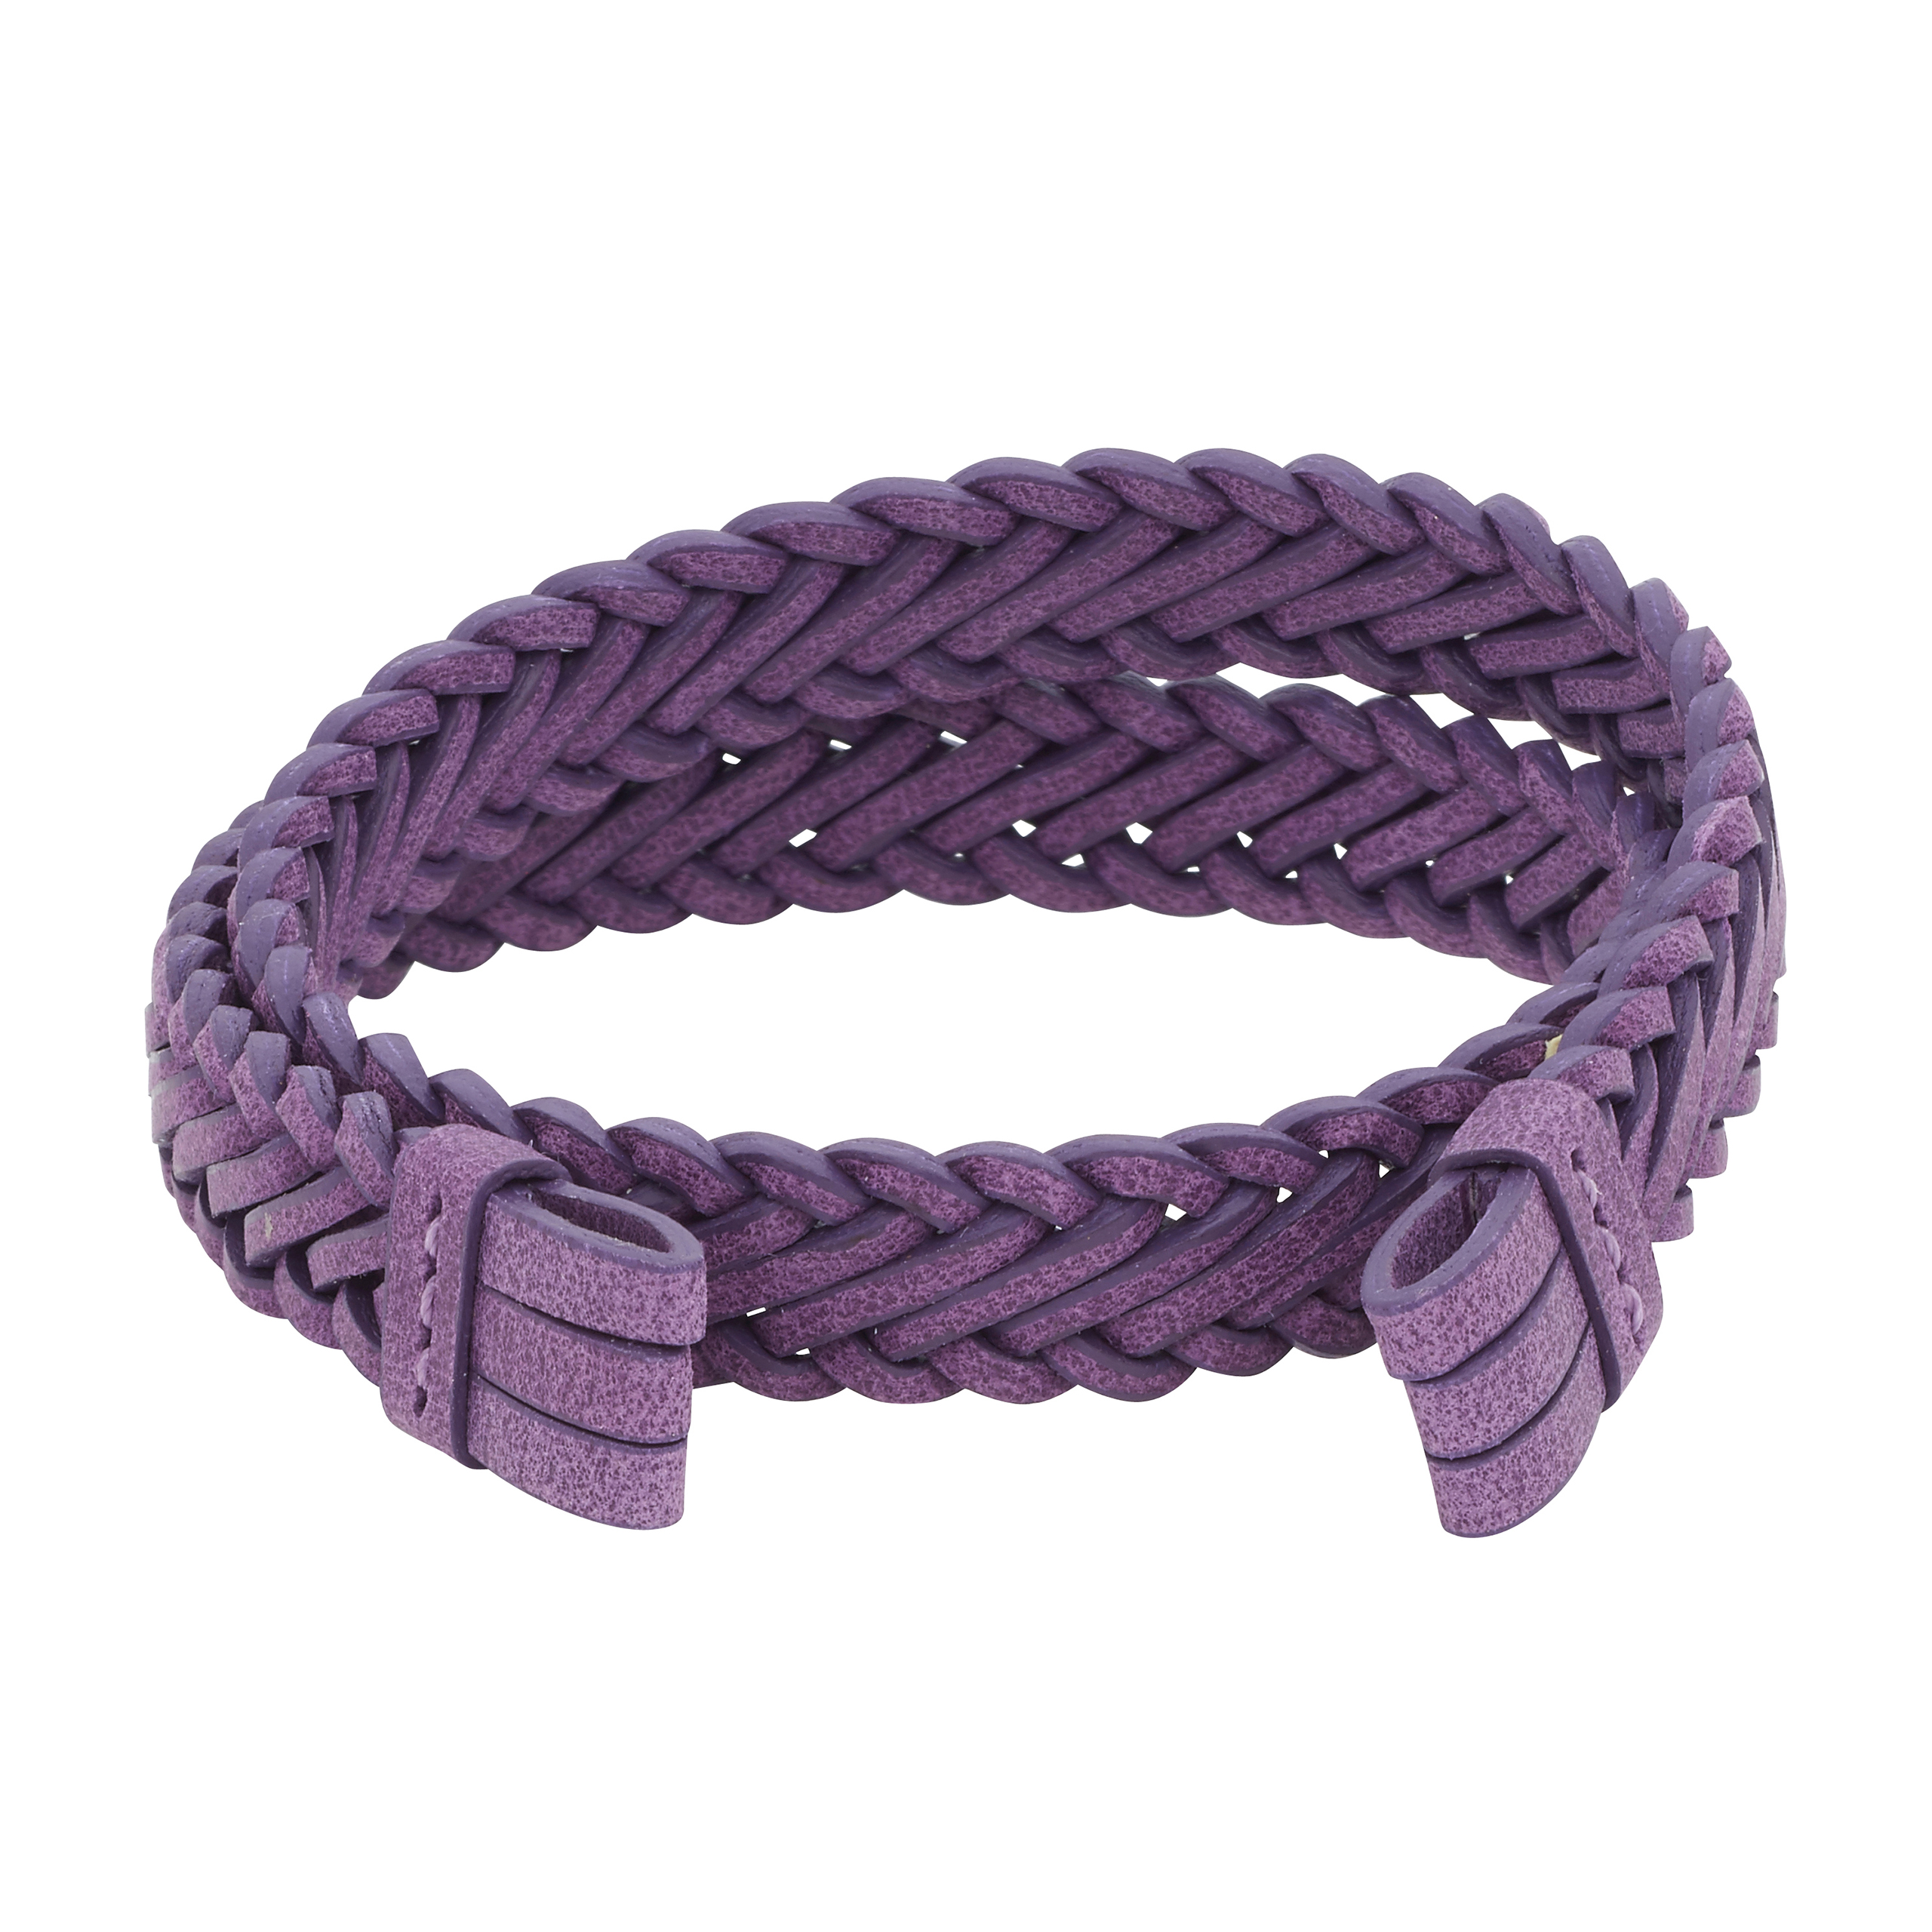 Bracelet, without clasp - Link